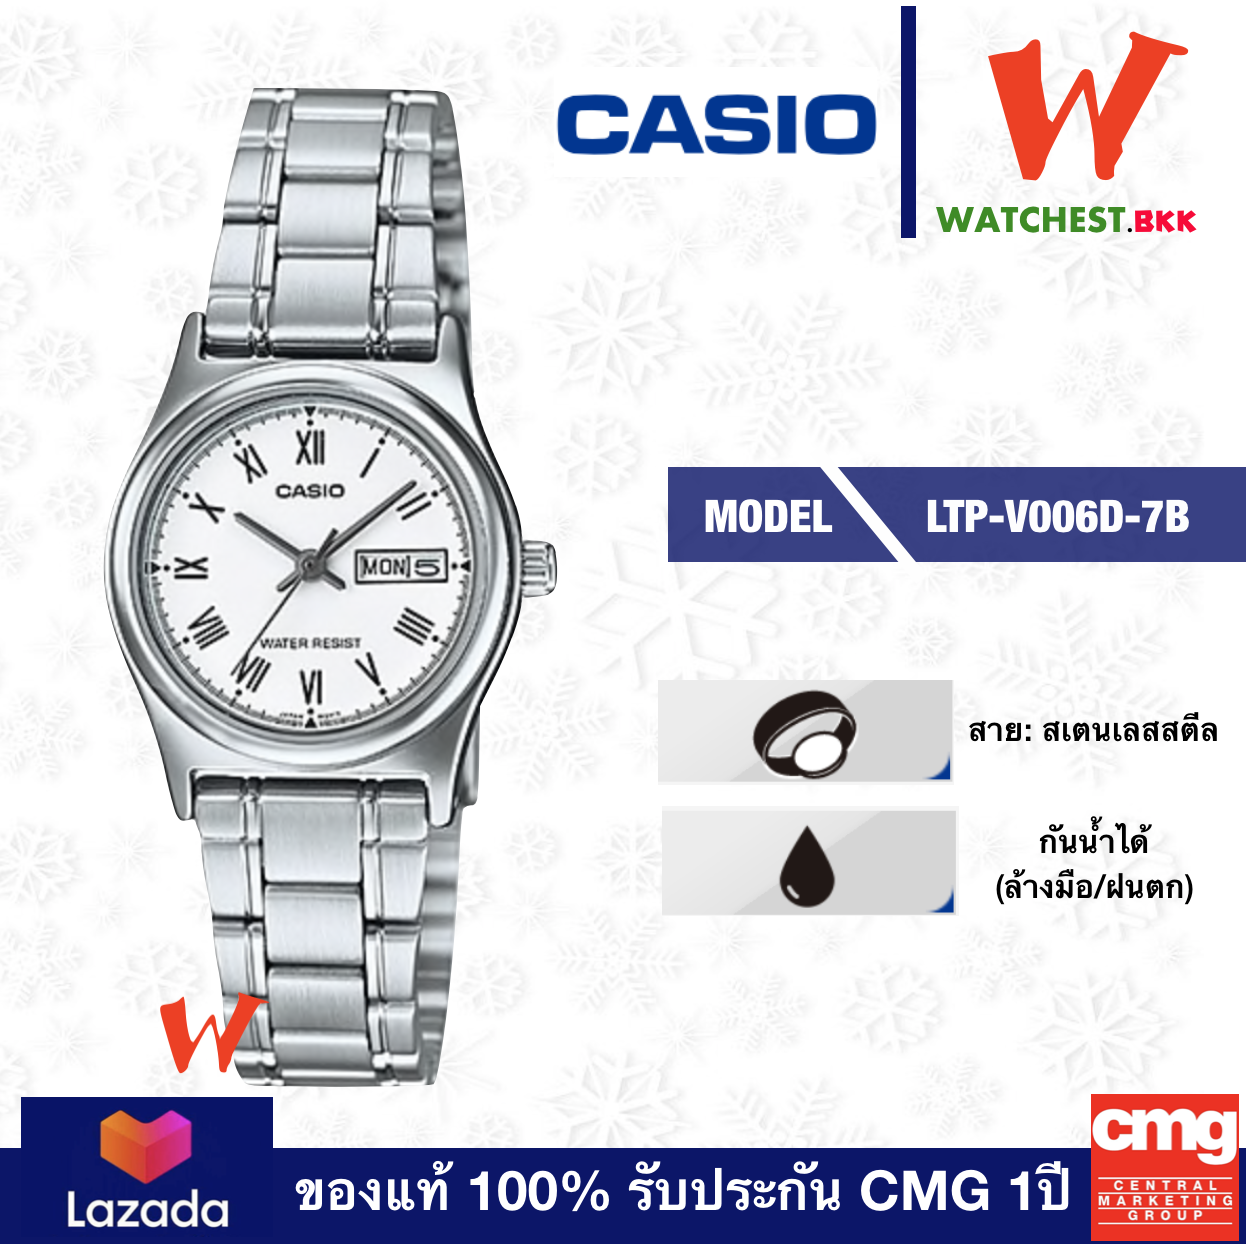 casio นาฬิกาข้อมือผู้หญิง สายสเตนเลส รุ่น LTP-V006D-7B คาสิโอ้ สายเหล็ก ตัวล็อกบานพับ (watchestbkk คาสิโอ แท้ ของแท้100% ประกัน CMG)